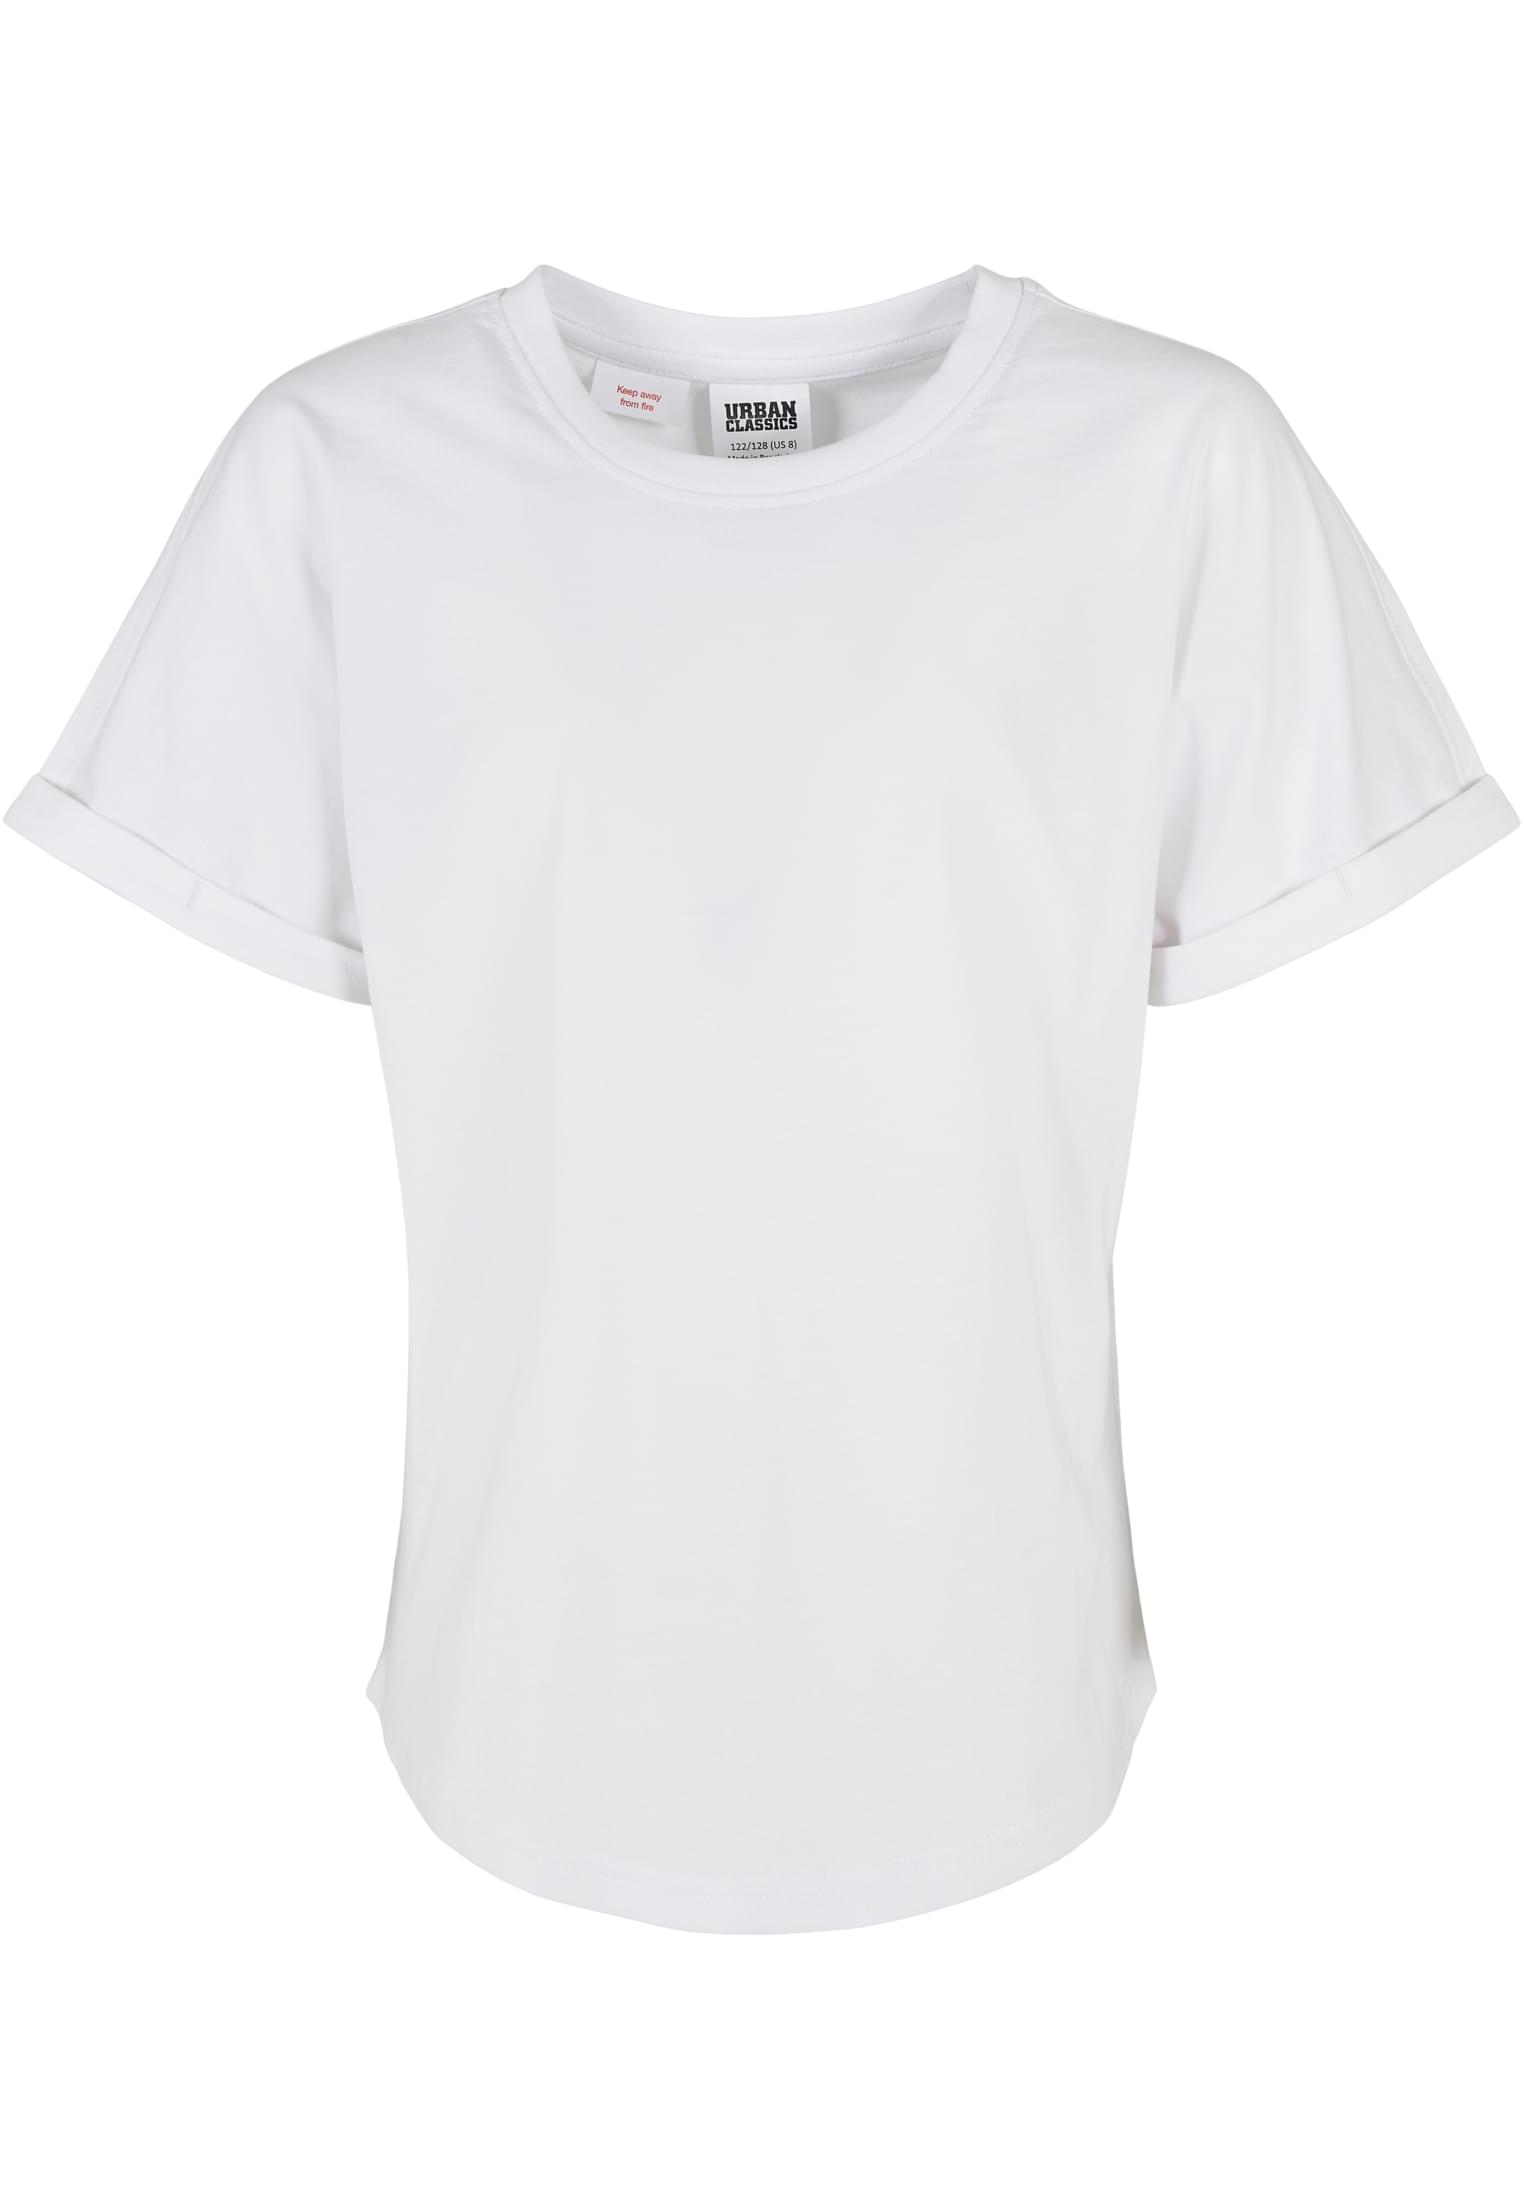 Long Shaped Turnup Tee T-Shirt For Boys - White